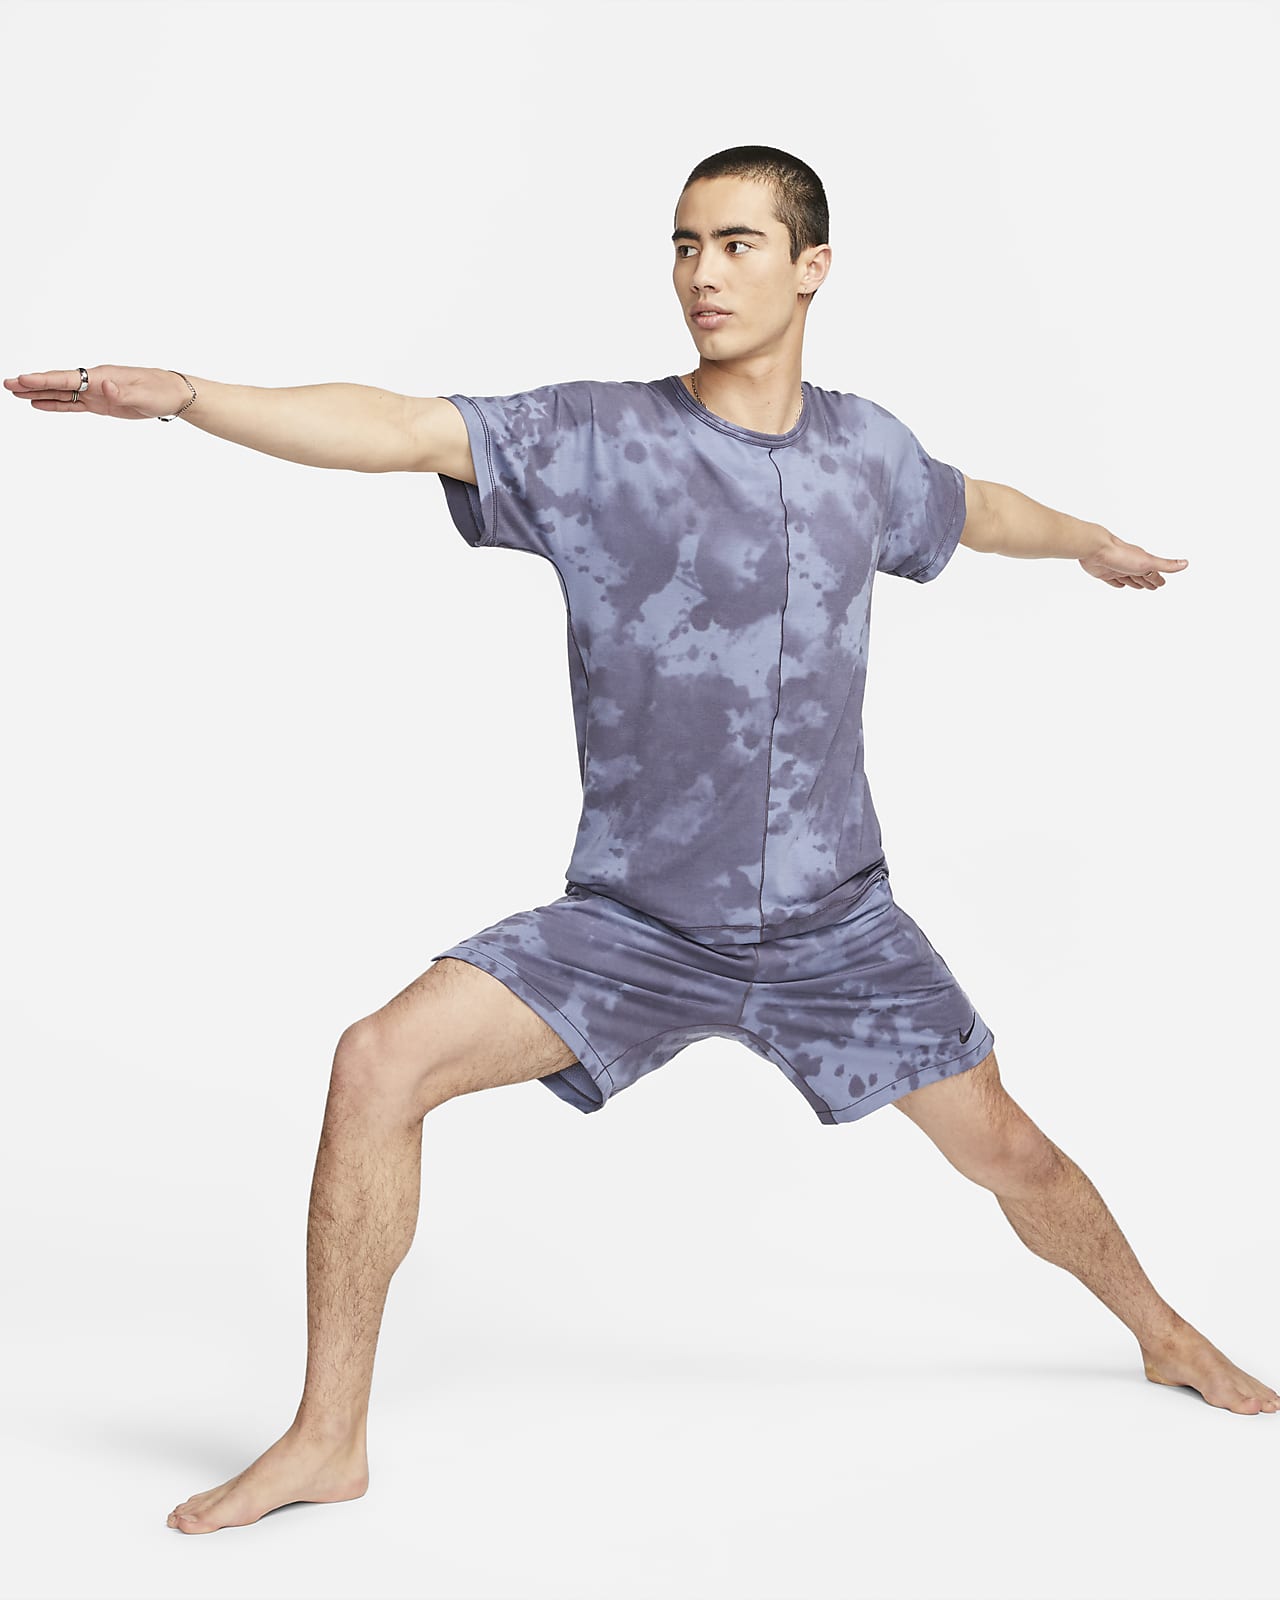 Nike Yoga Dri-FIT Men's 18cm (approx.) Unlined Shorts